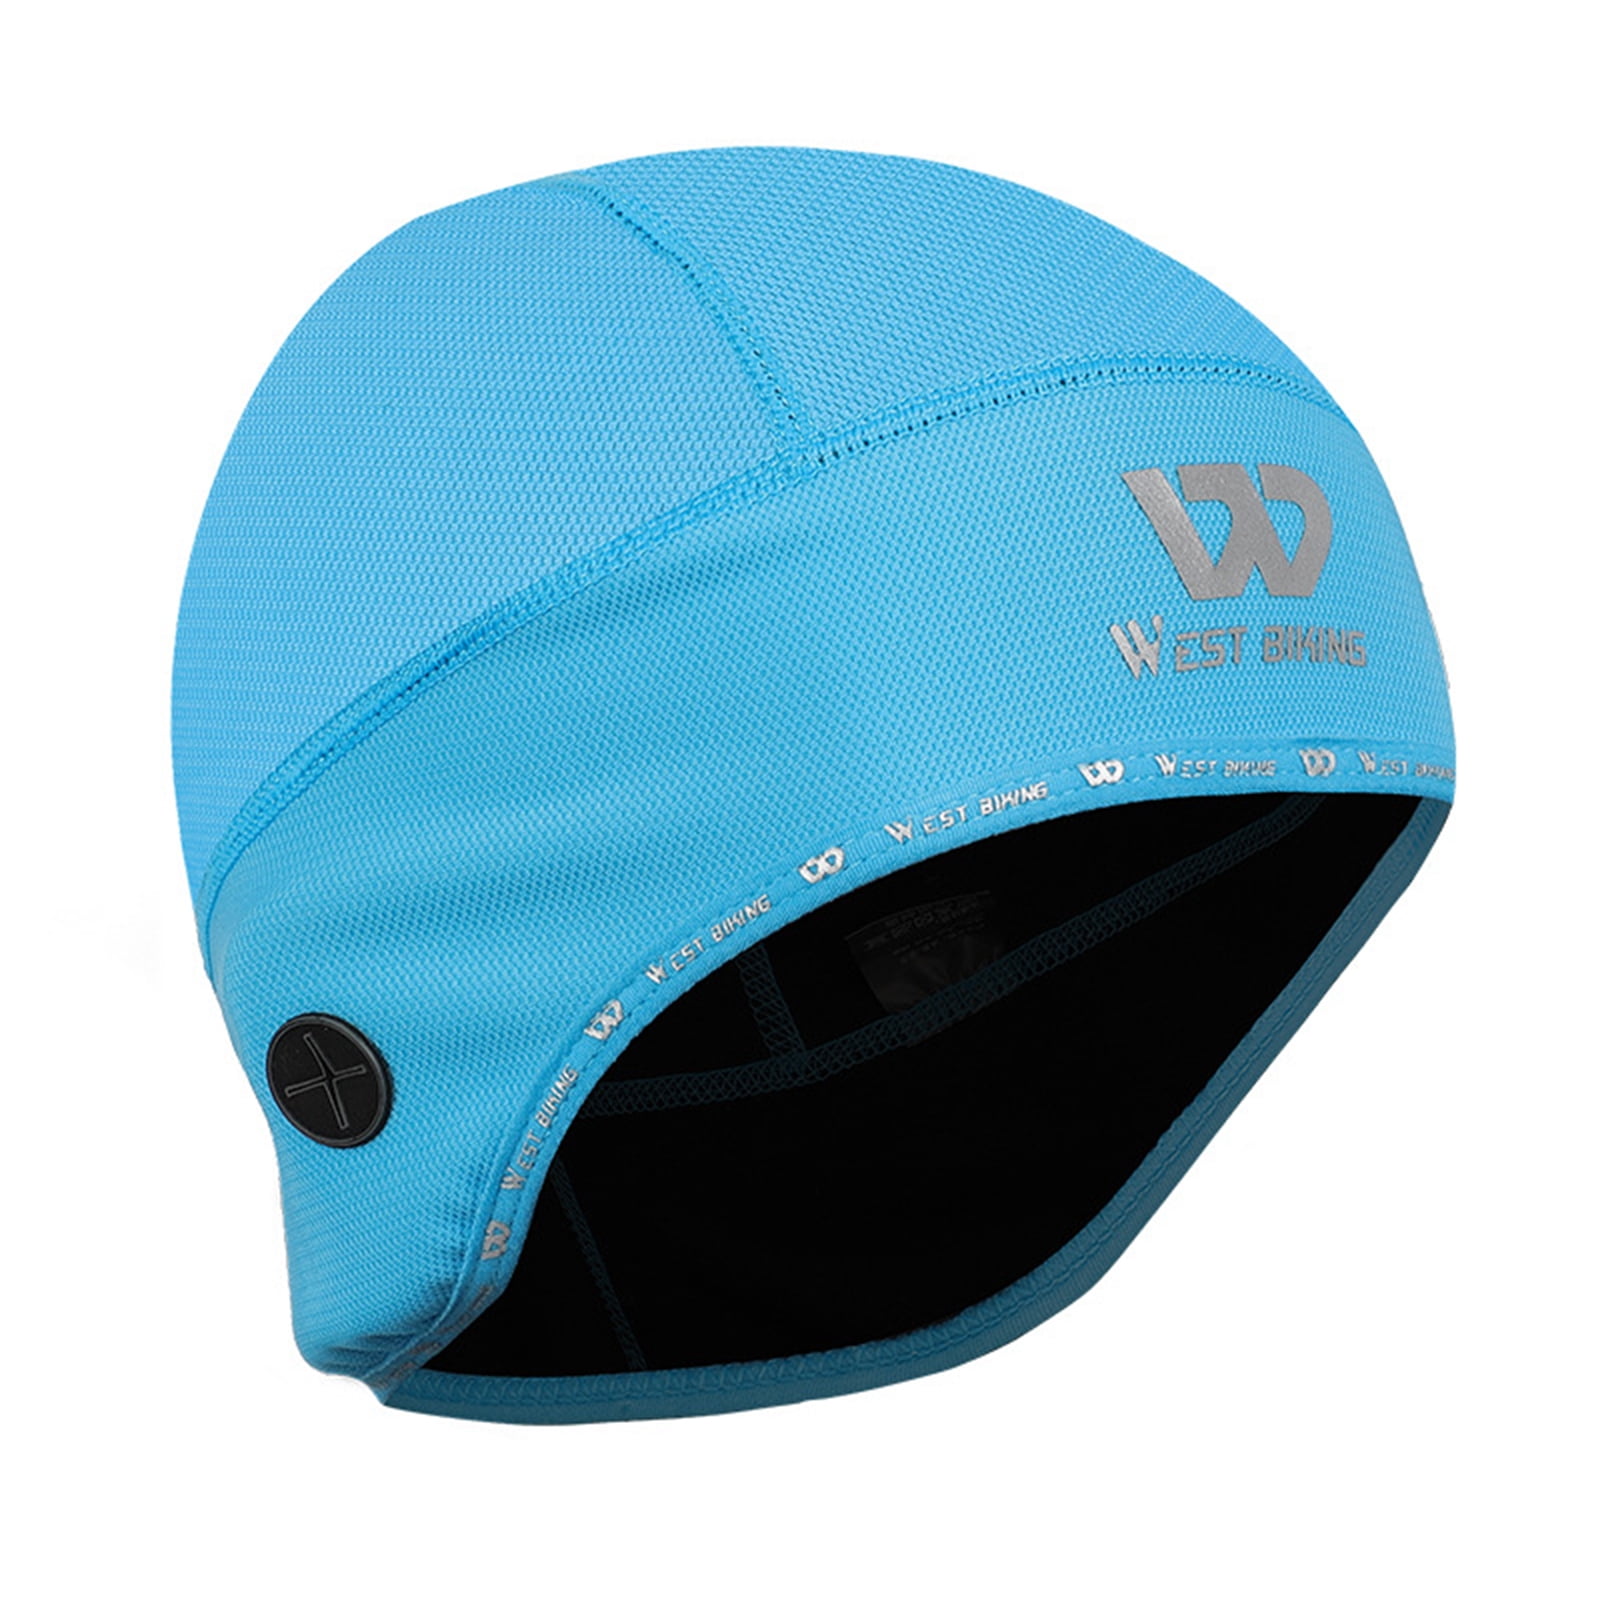 Unisex Cycling Headbands Ski Earmuffs Running Cycling Camping Fitness Sport Caps 